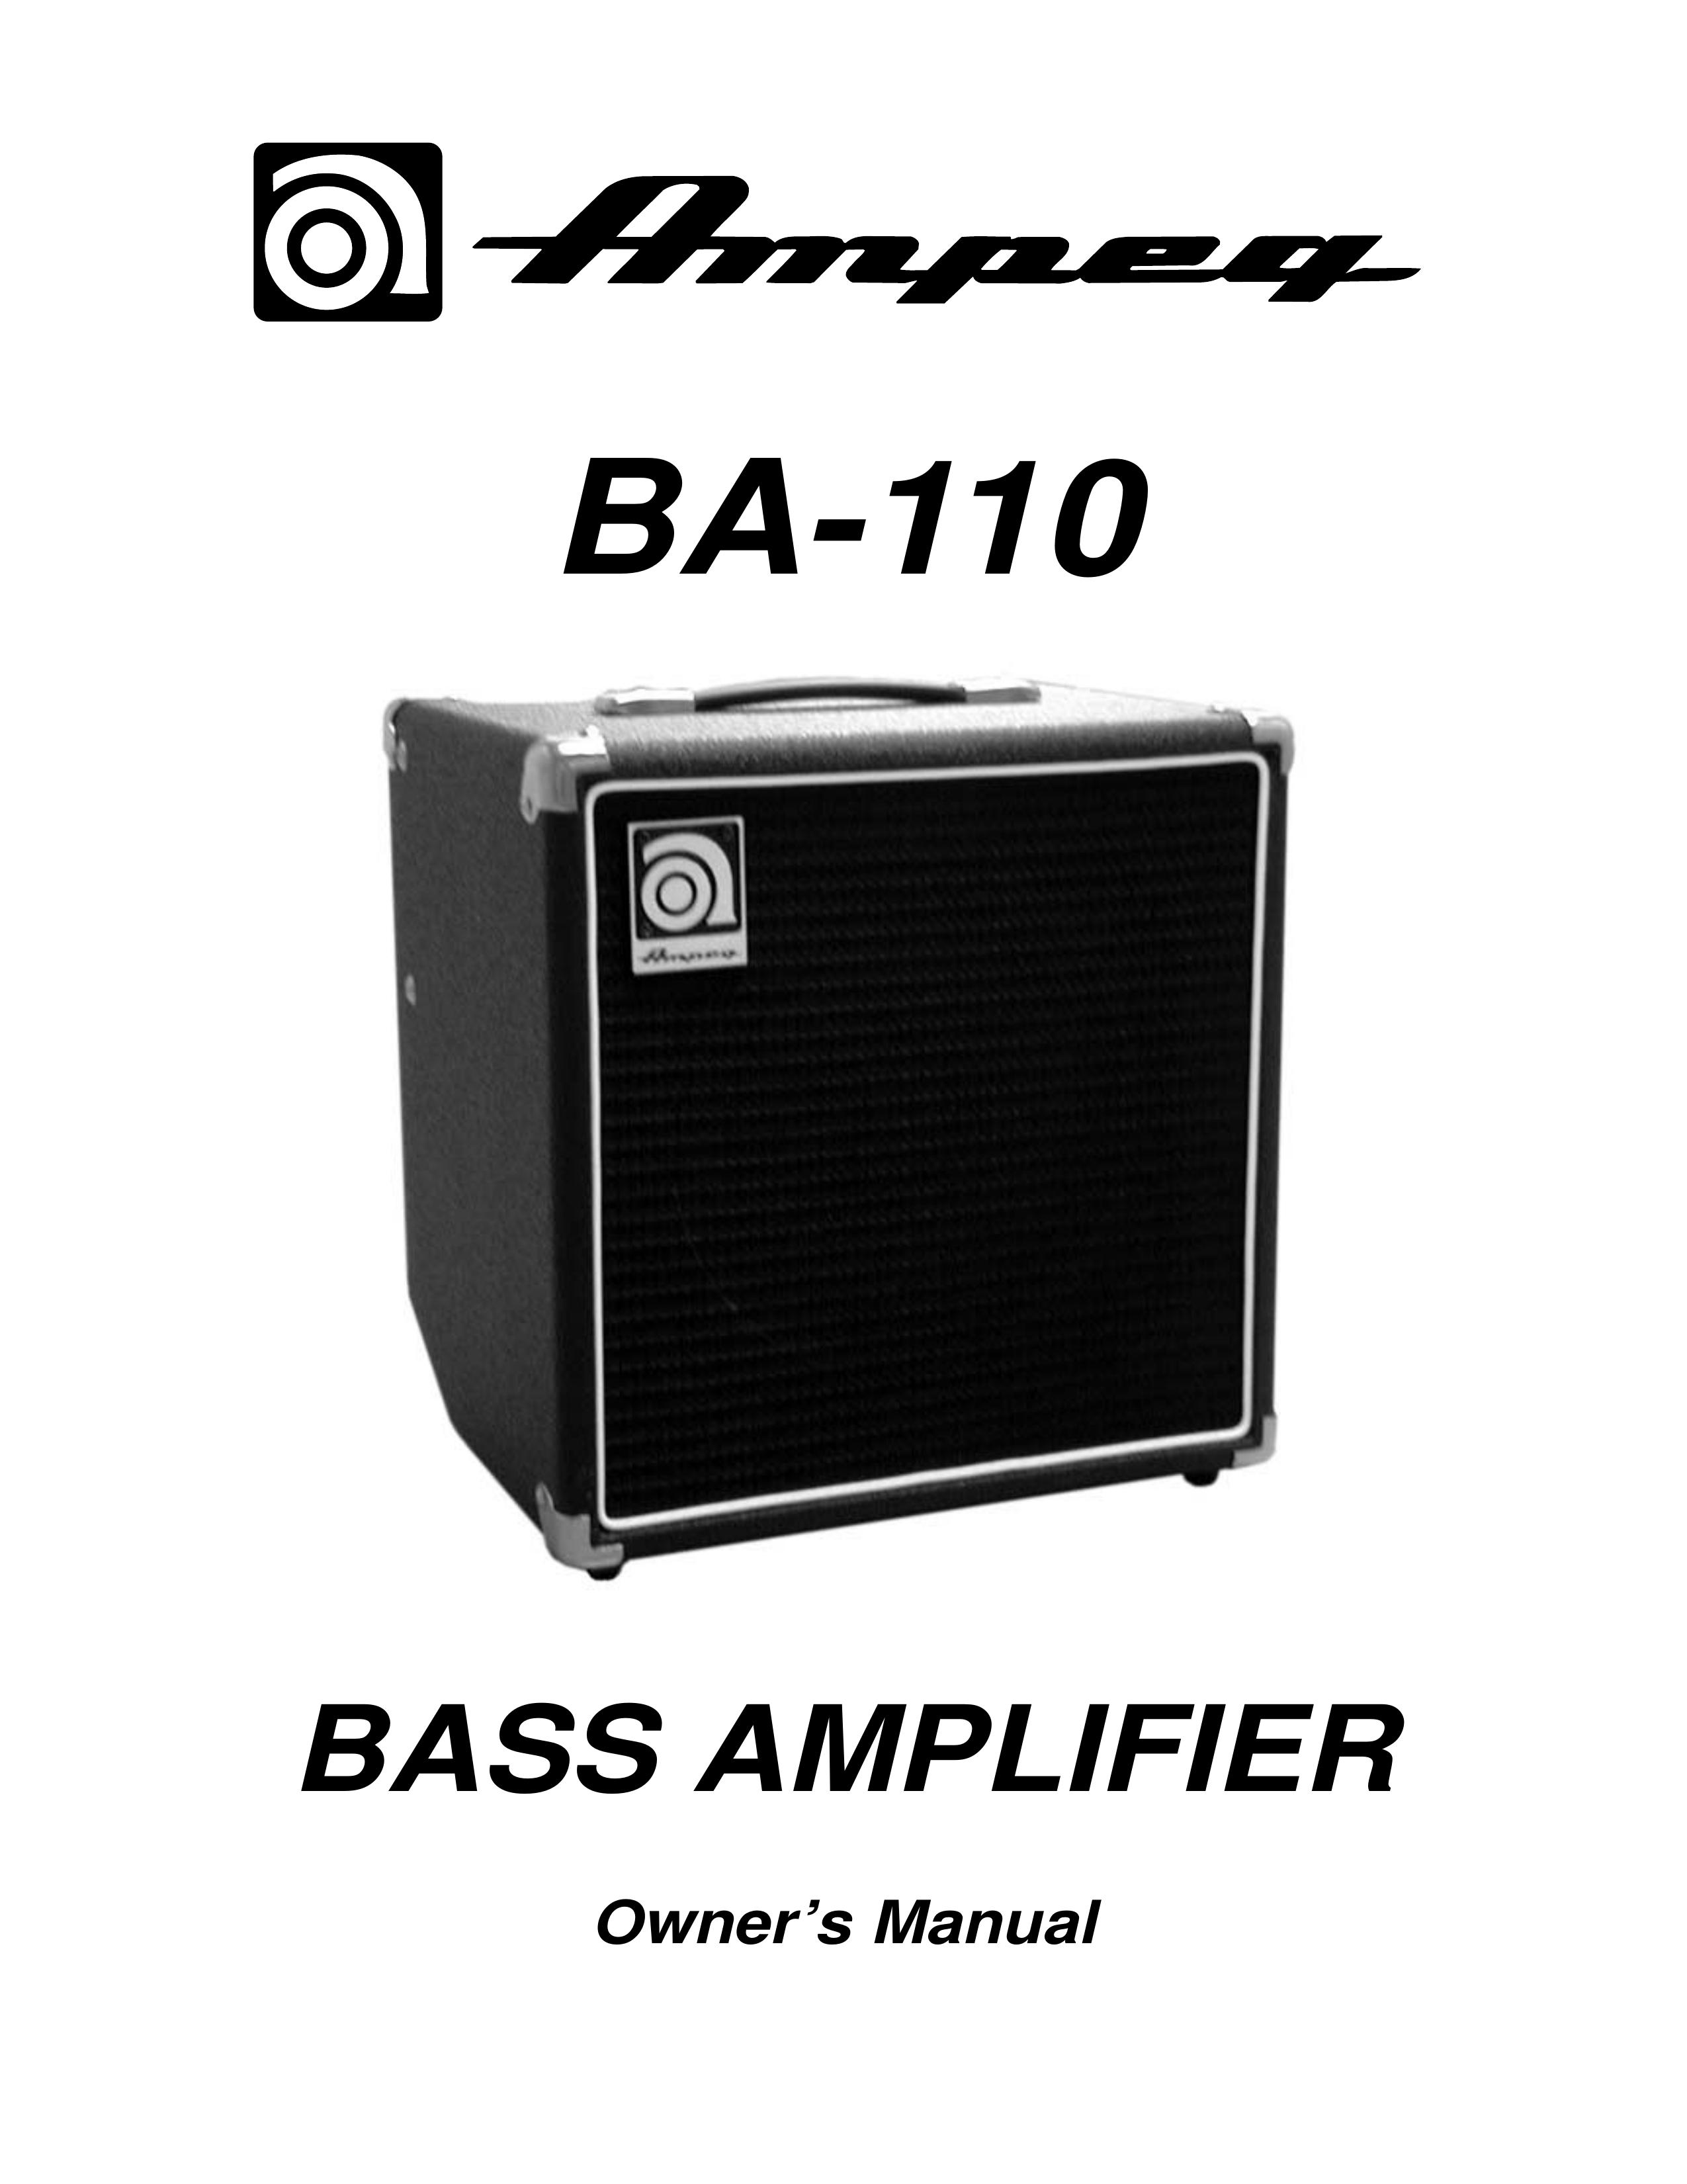 Ampeg BA-110 Musical Instrument Amplifier User Manual